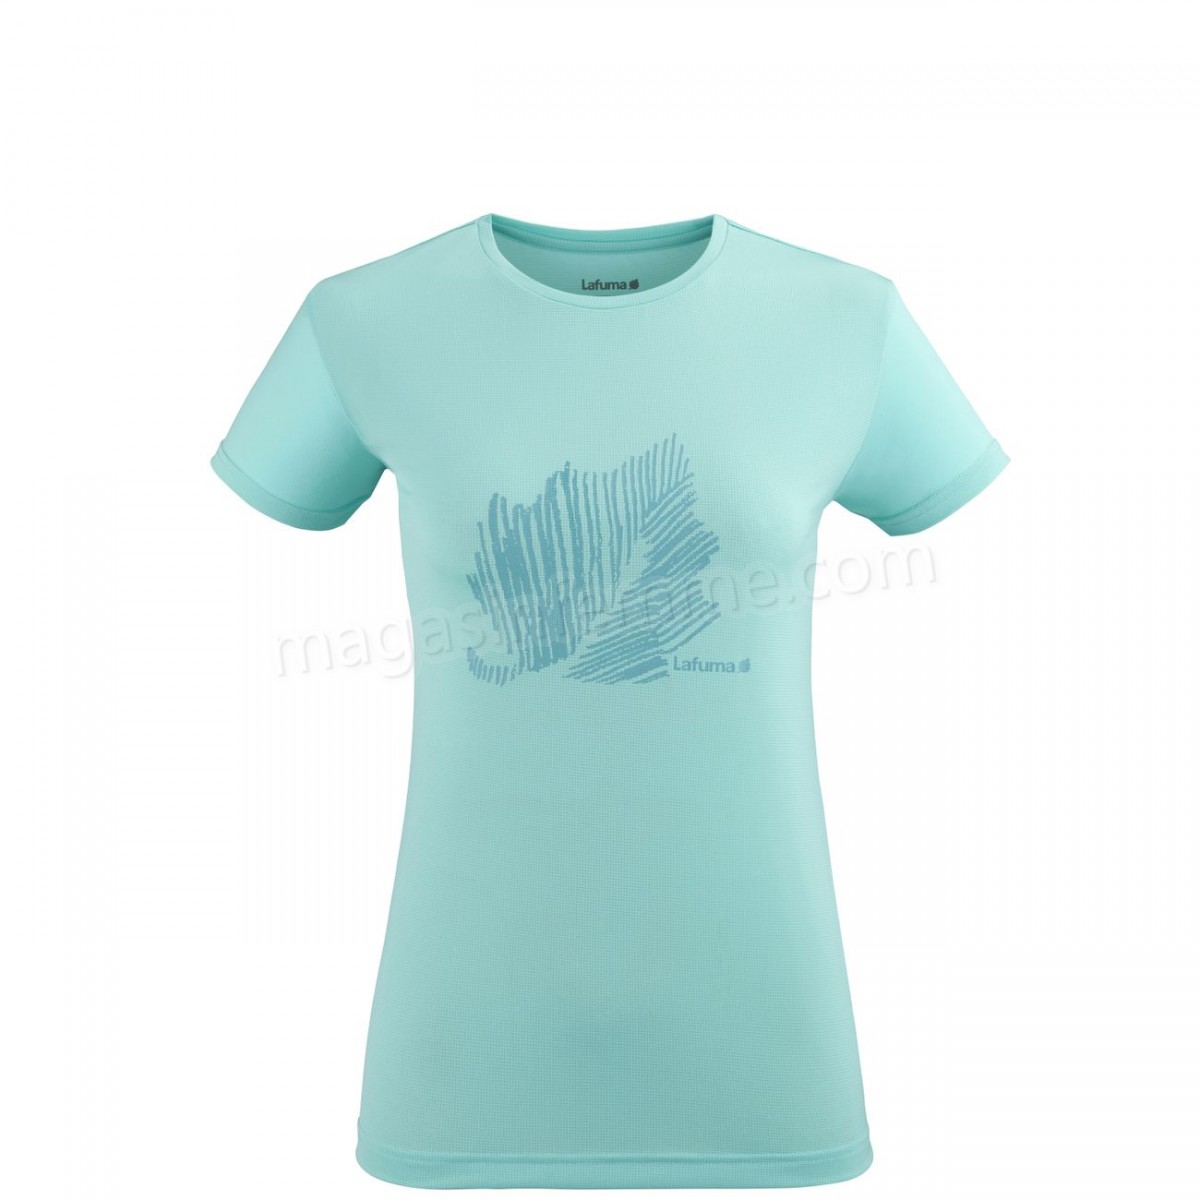 Lafuma-Randonnée pédestre femme LAFUMA Tee-shirt Manches Courtes Femme - Corporate Tee W Bleu en solde - -0